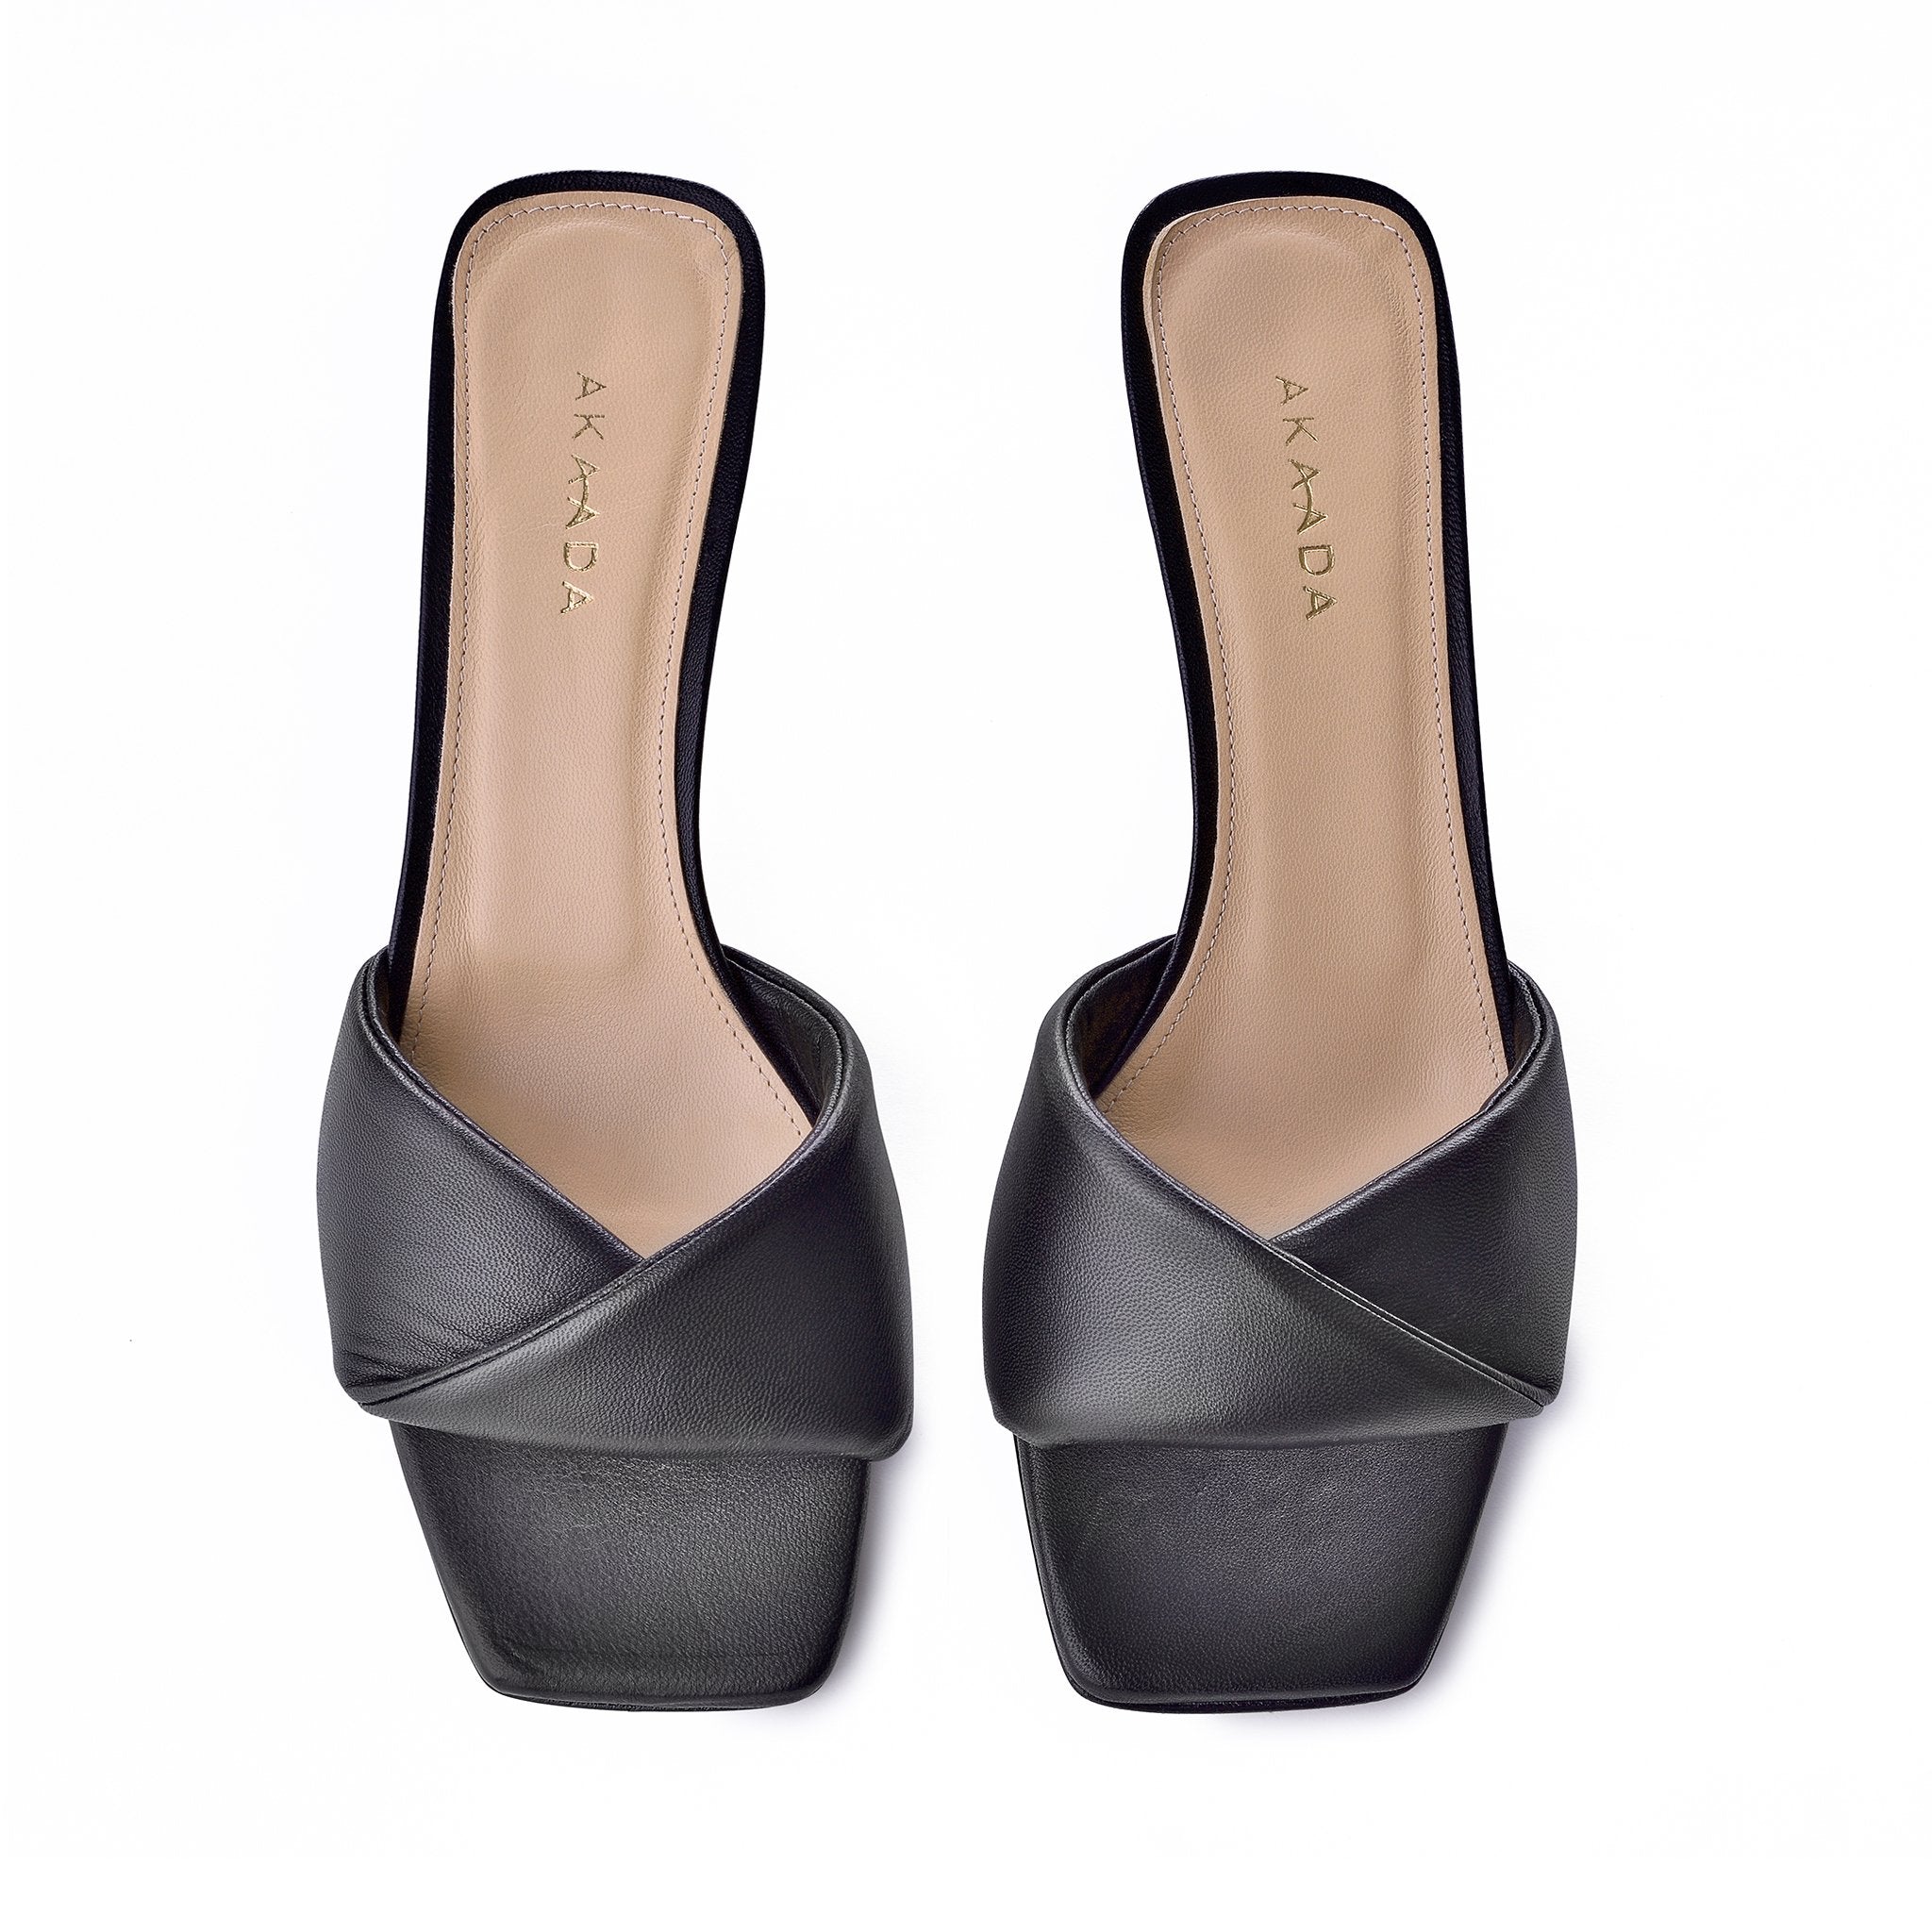 Haya Black Soft Leather Sandals 1413-02 - 6